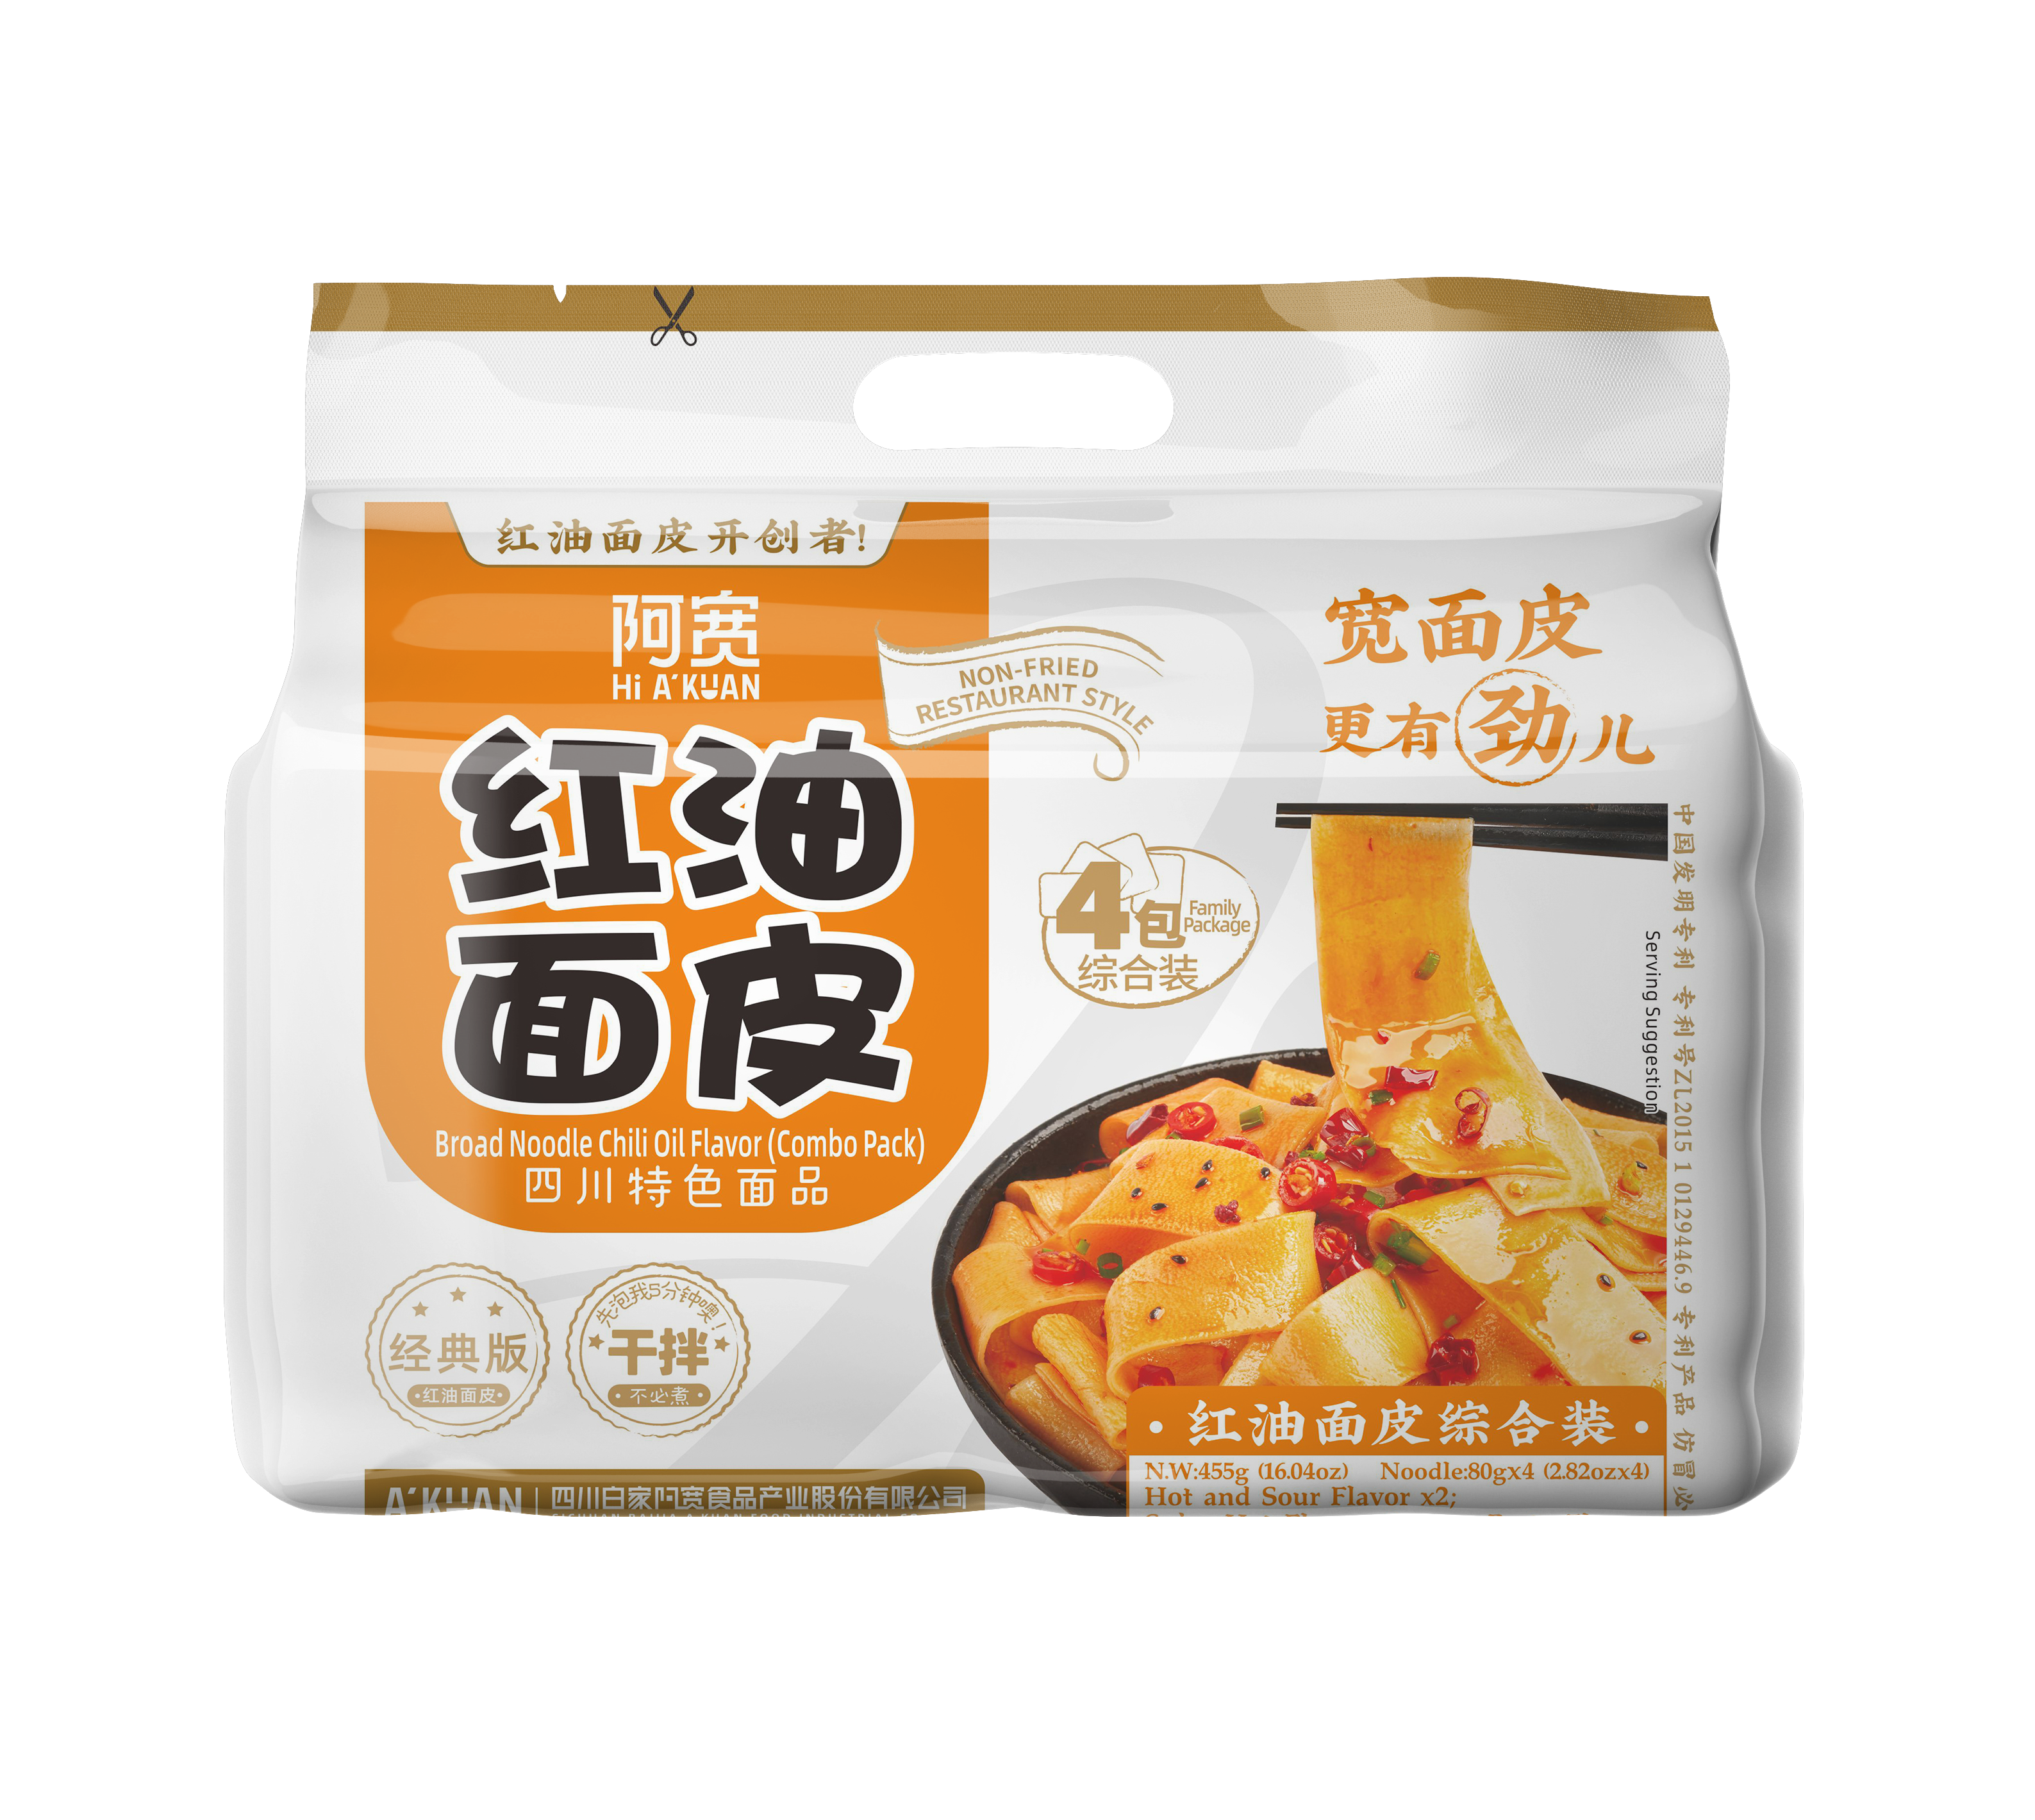 baijia-noodles-chilli-oilcombo-pack